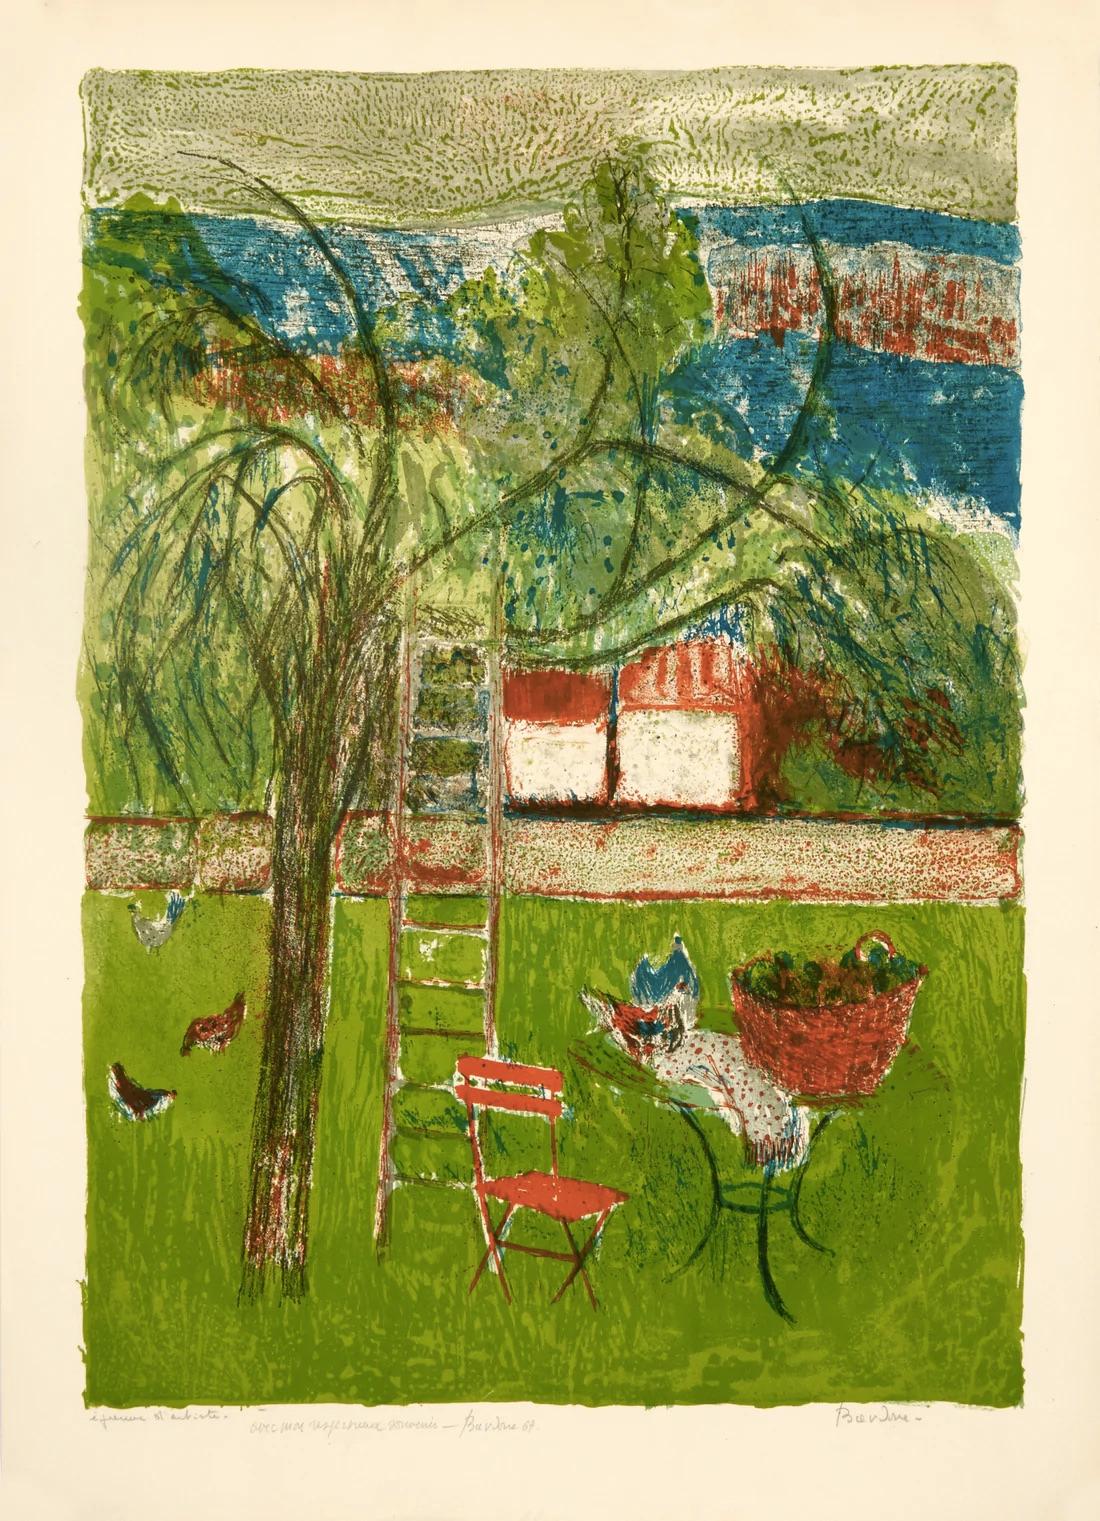 Backyard, Ladder Resting on Tree, Orange Chair by Guy Bardone, 1967